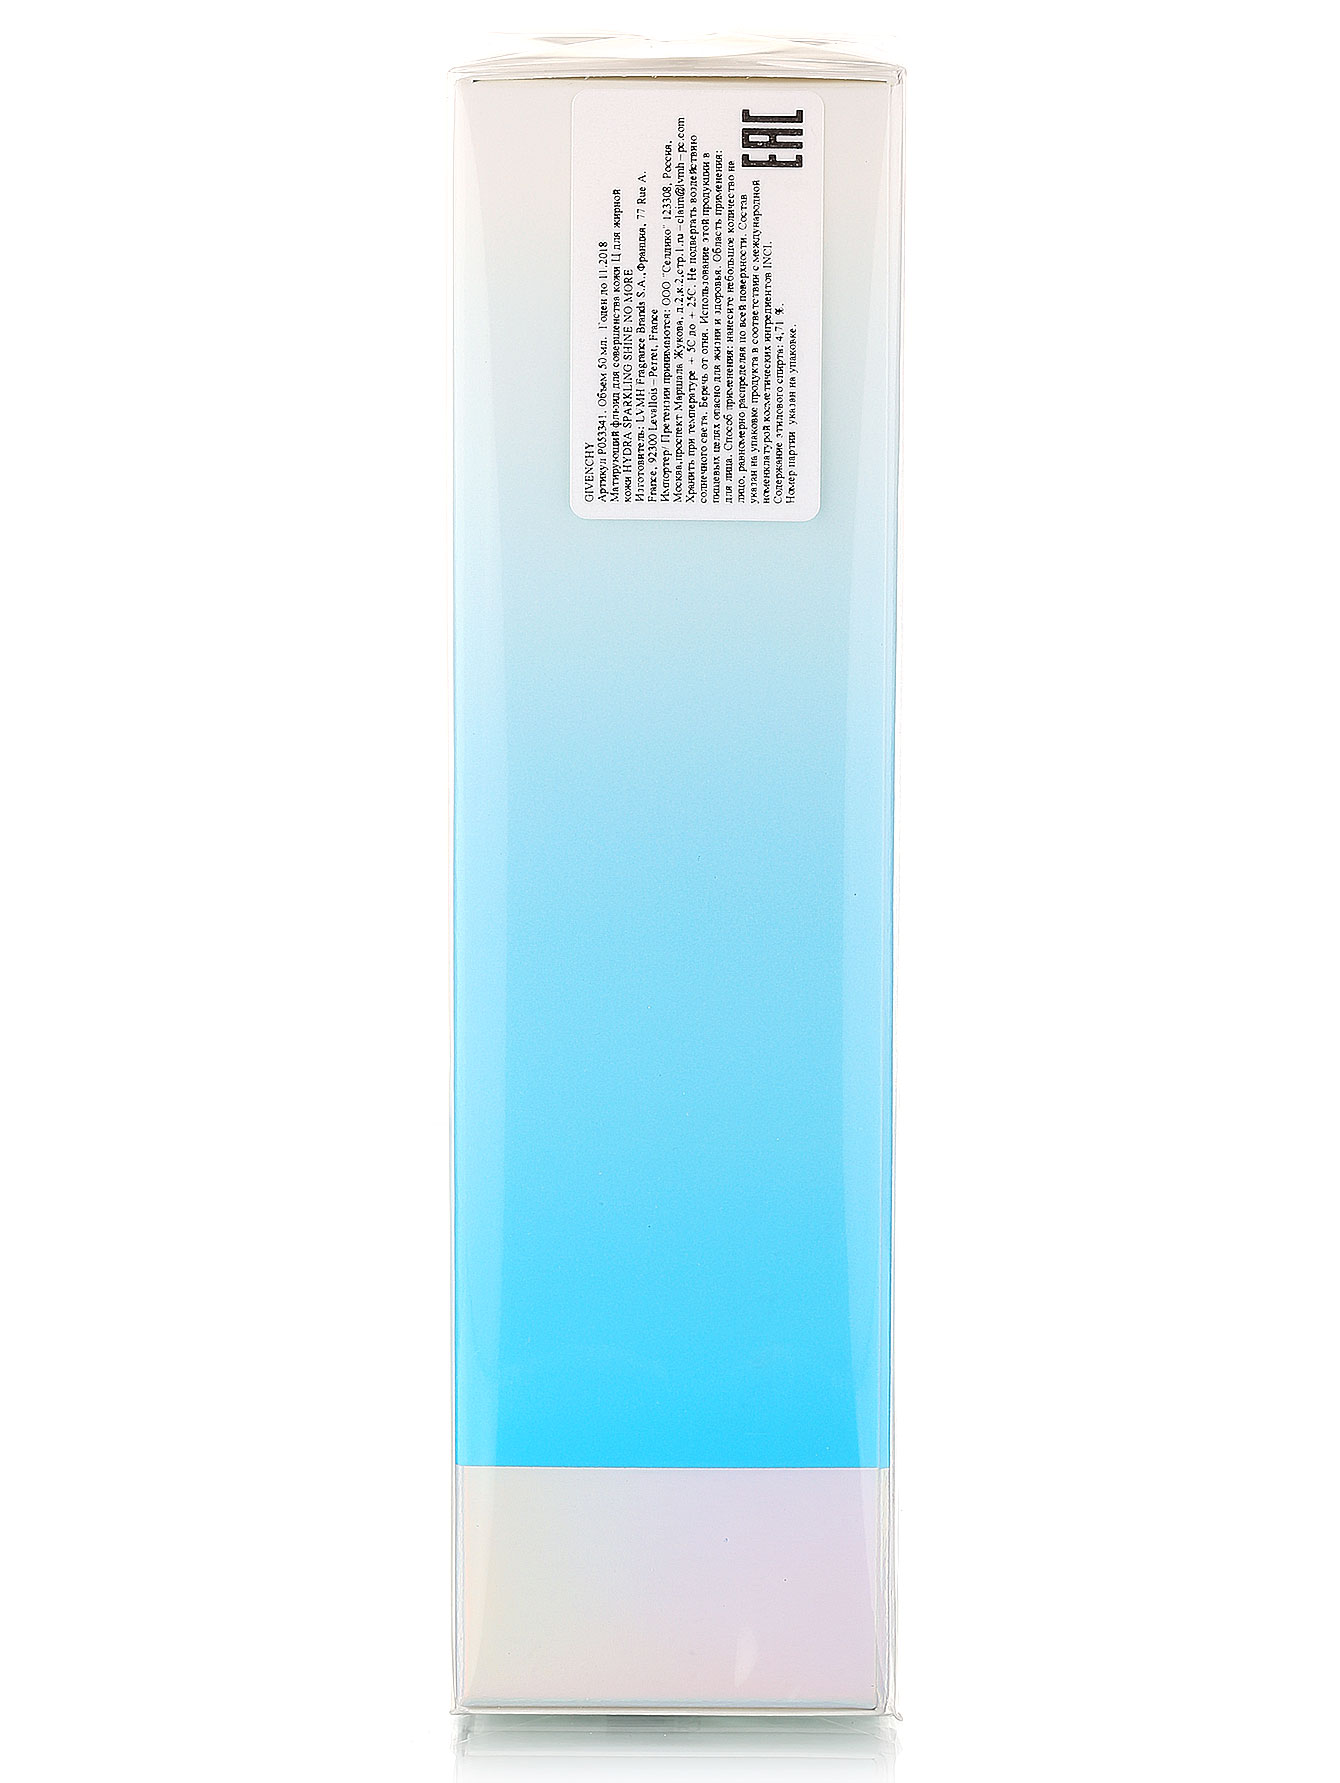  Матирующий флюид для кожи- Hydra Sparkling, 50ml - Модель Верх-Низ